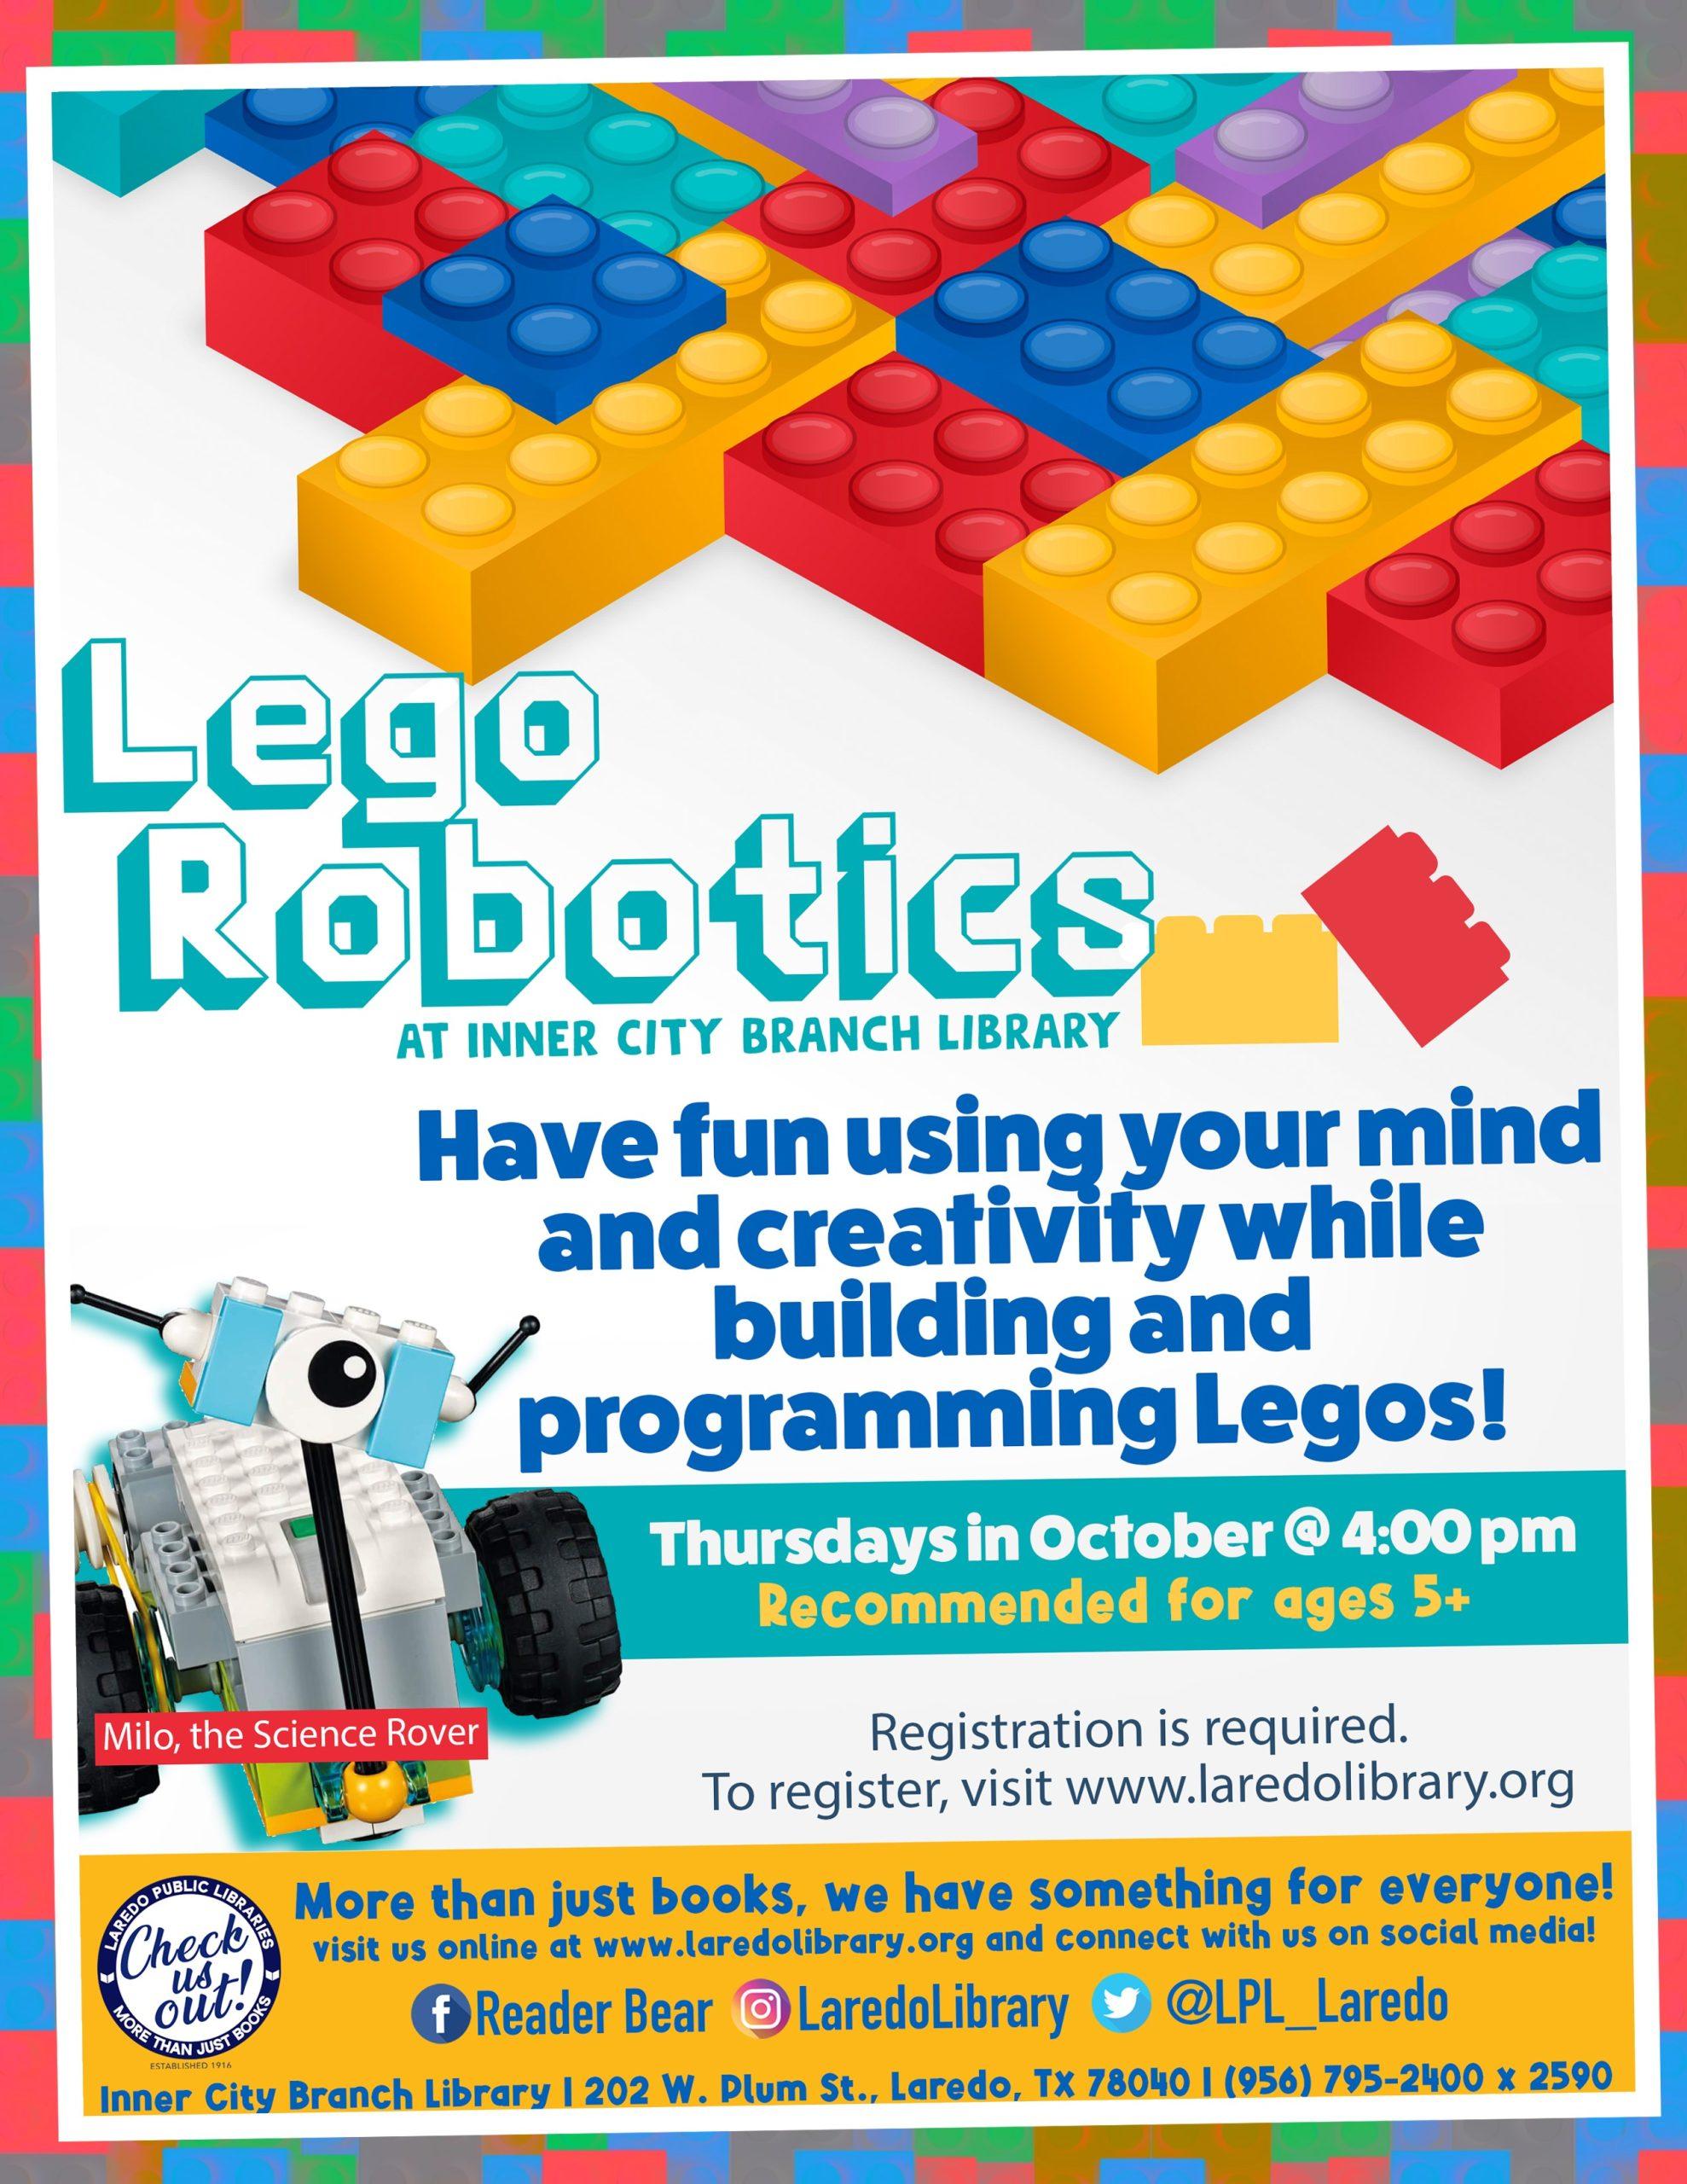 LEGO Robotics Registration Begins